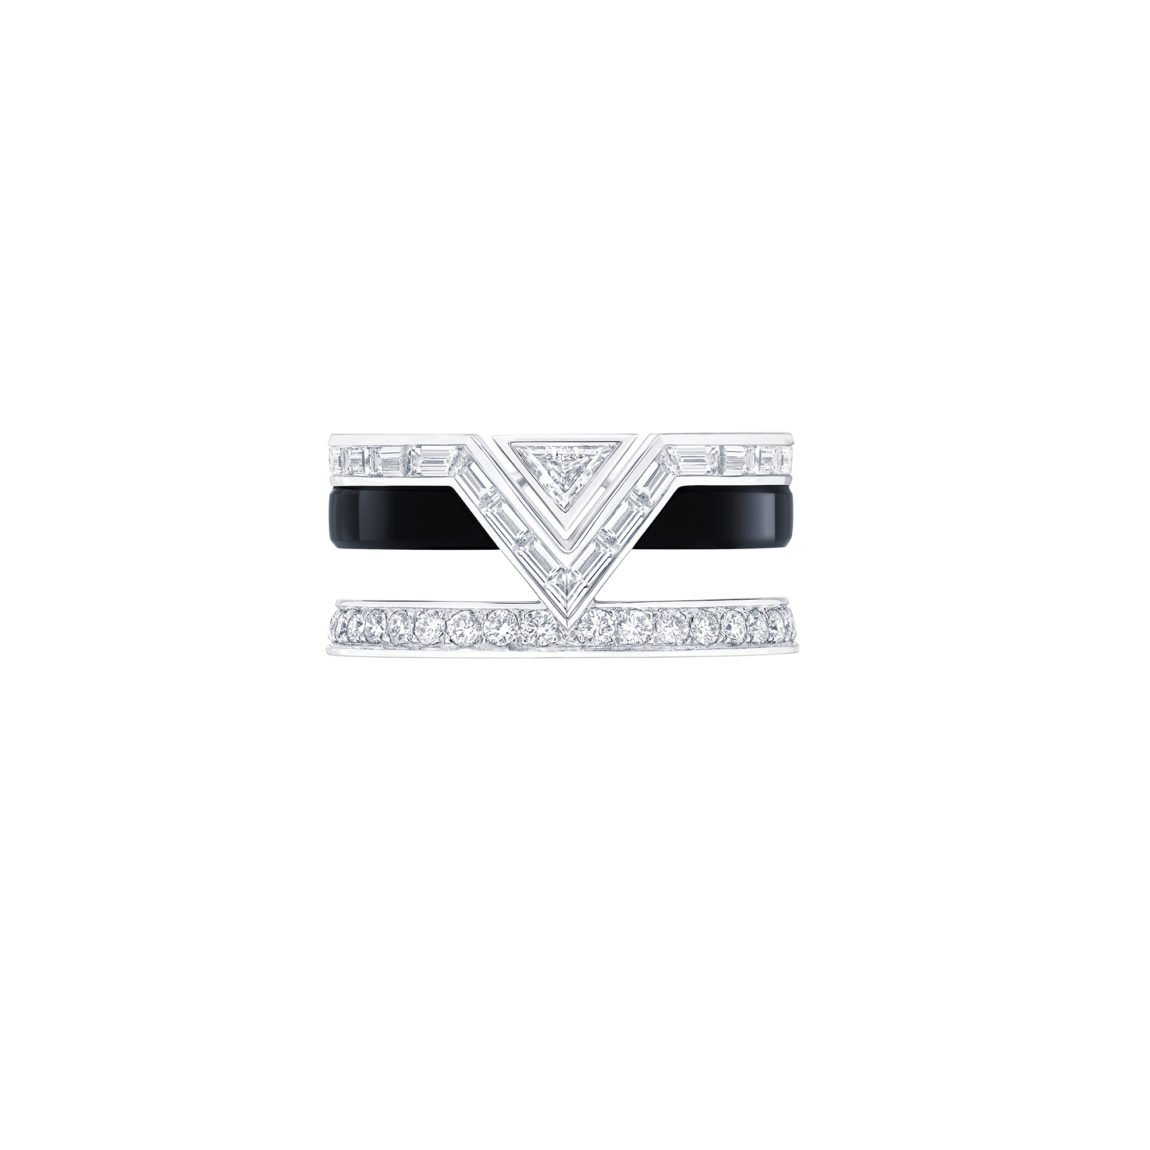 Louis Vuitton PURE V The emblem of high jewelery - ZOE Magazine